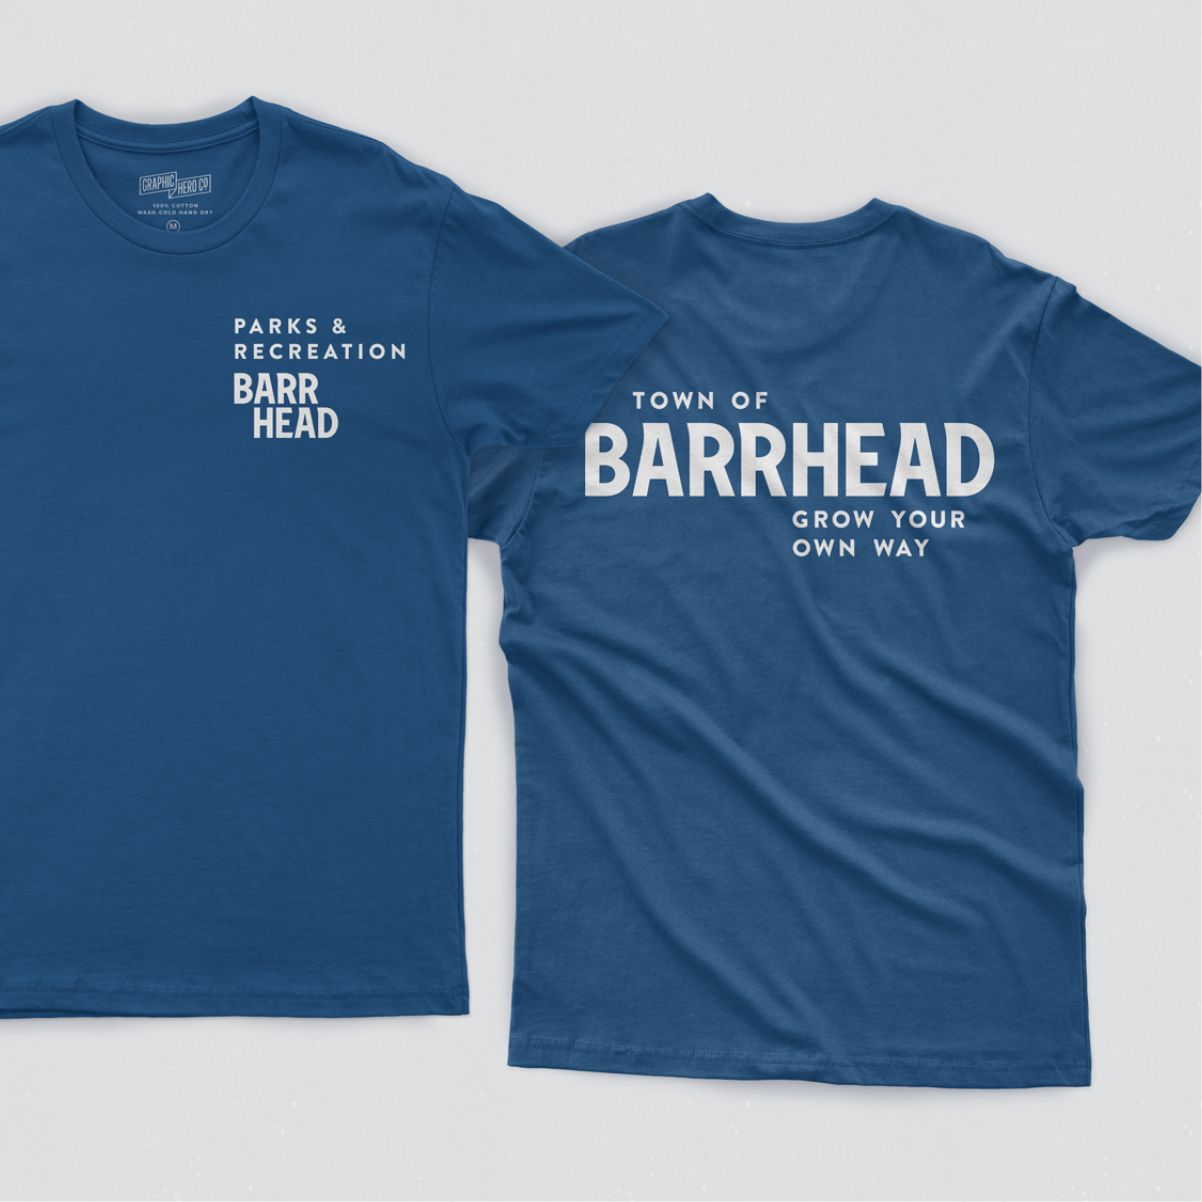 Barrhead Shirts